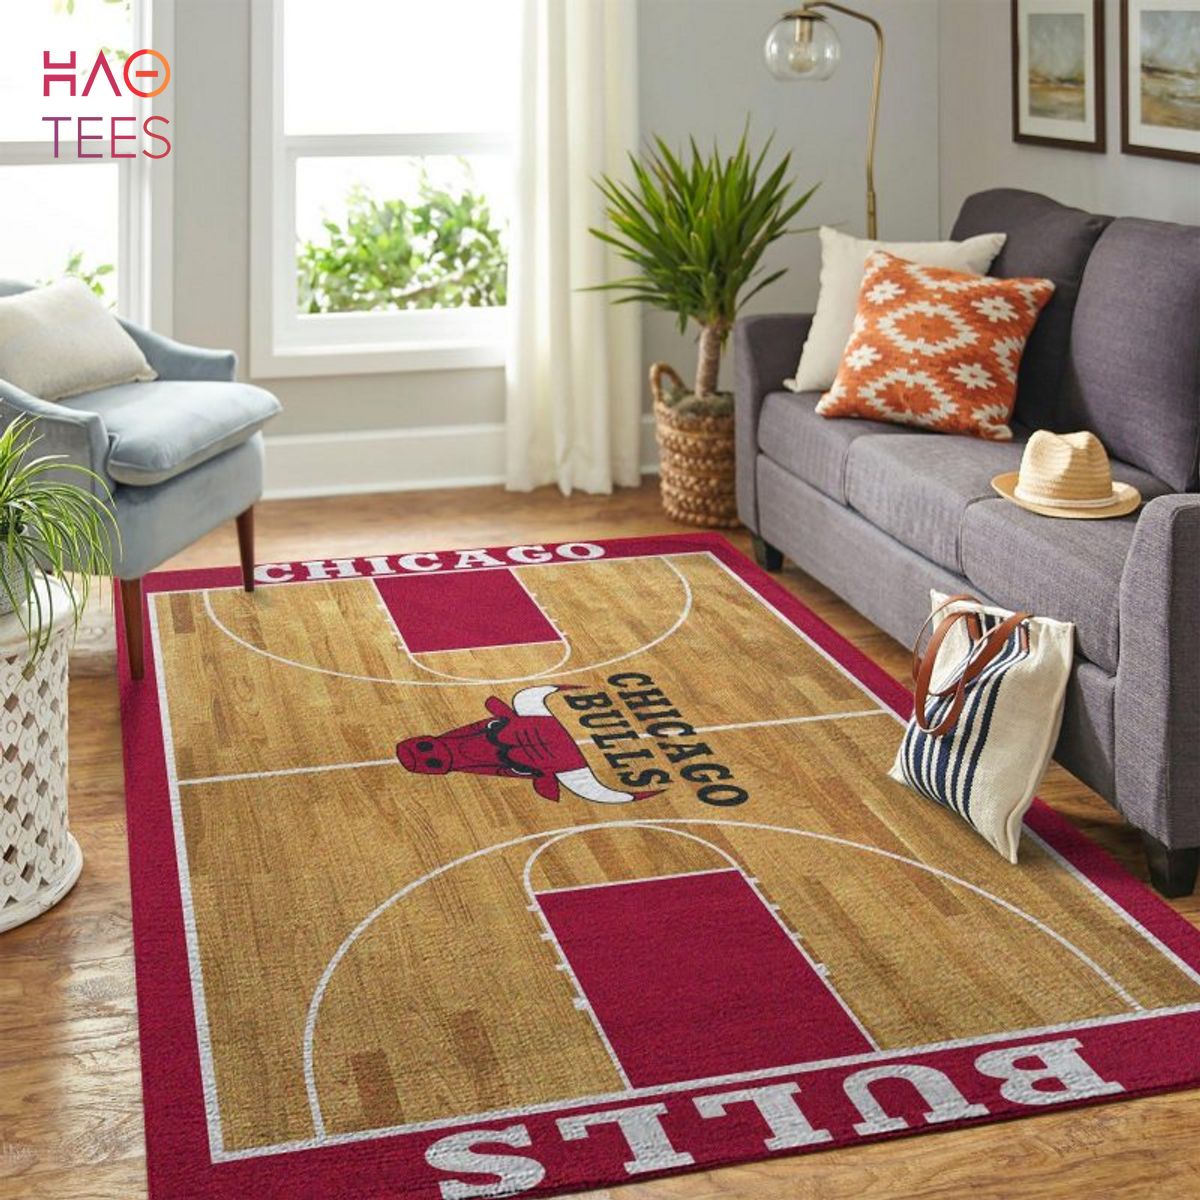 BEST Chicago Bulls Nba Limited Edition Rug Carpet Room Carpet Sport Custom Area Floor Home Decor